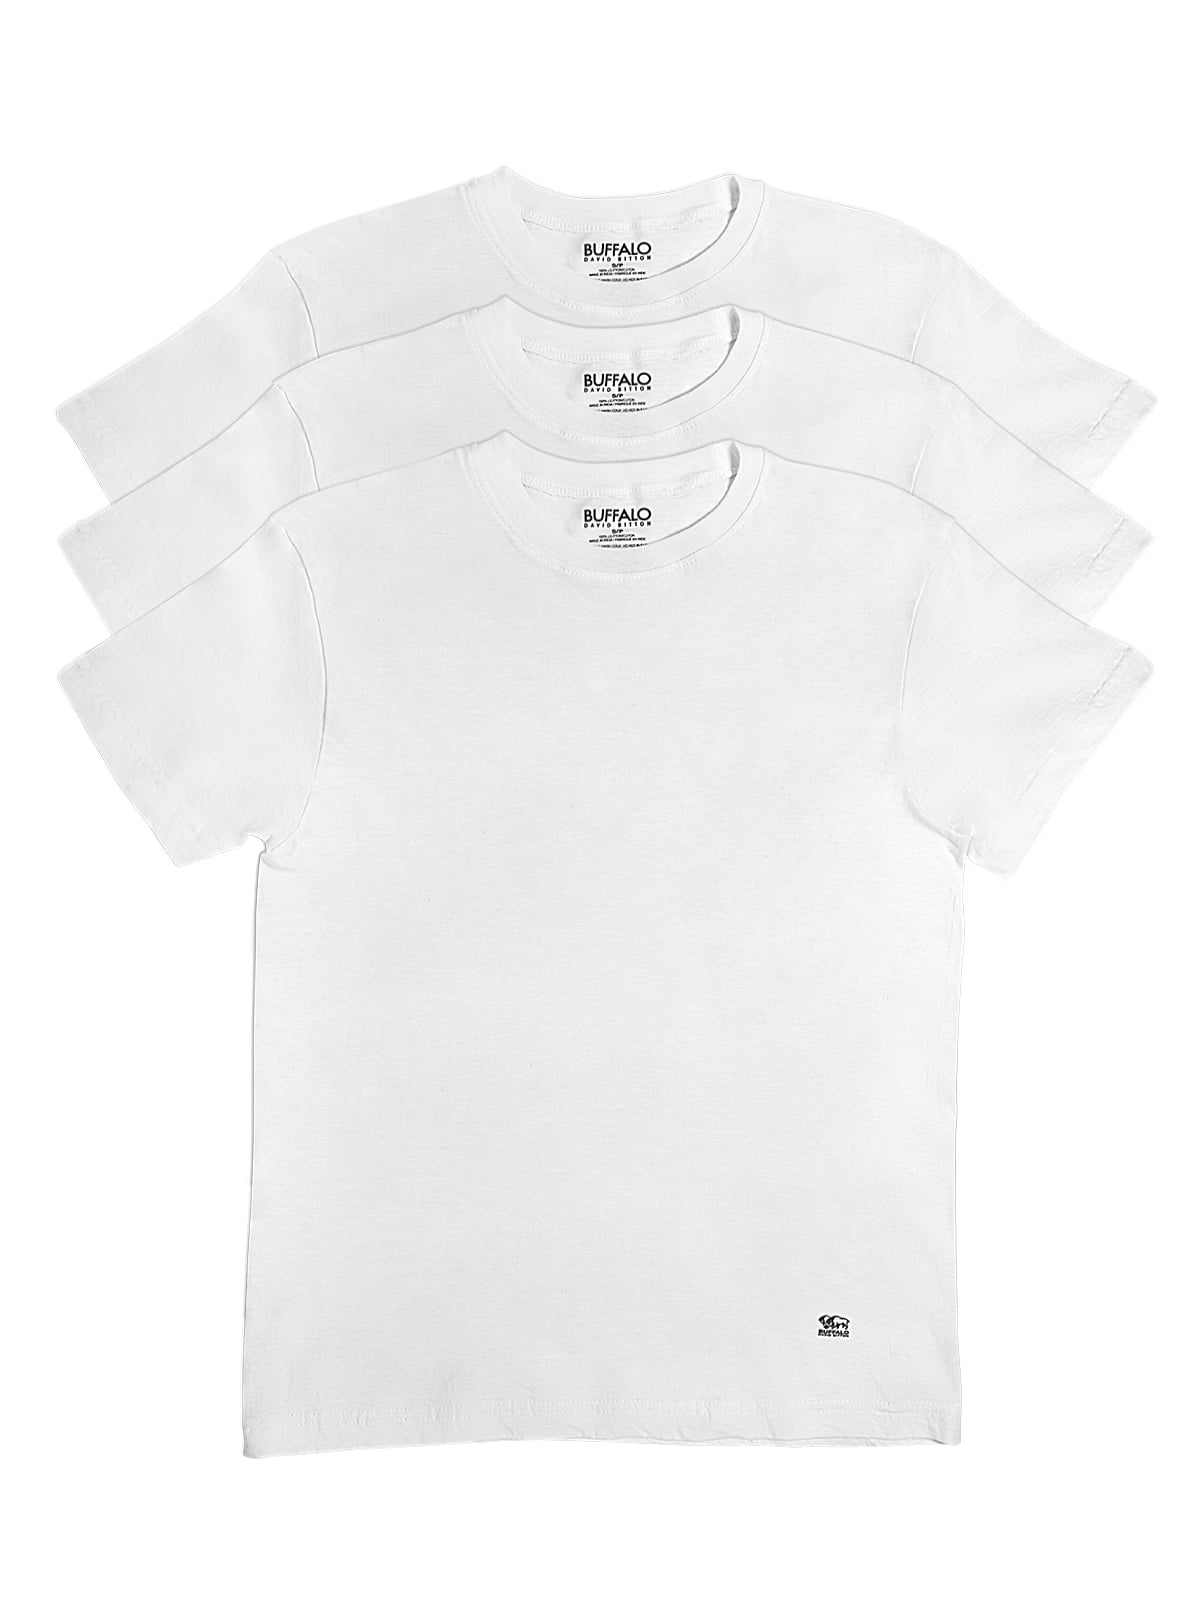 Buffalo David Bitton | White Medium) | 3-Pack T-Shirt | Tagless Crew (White, Men\'s 100% Cotton Neck